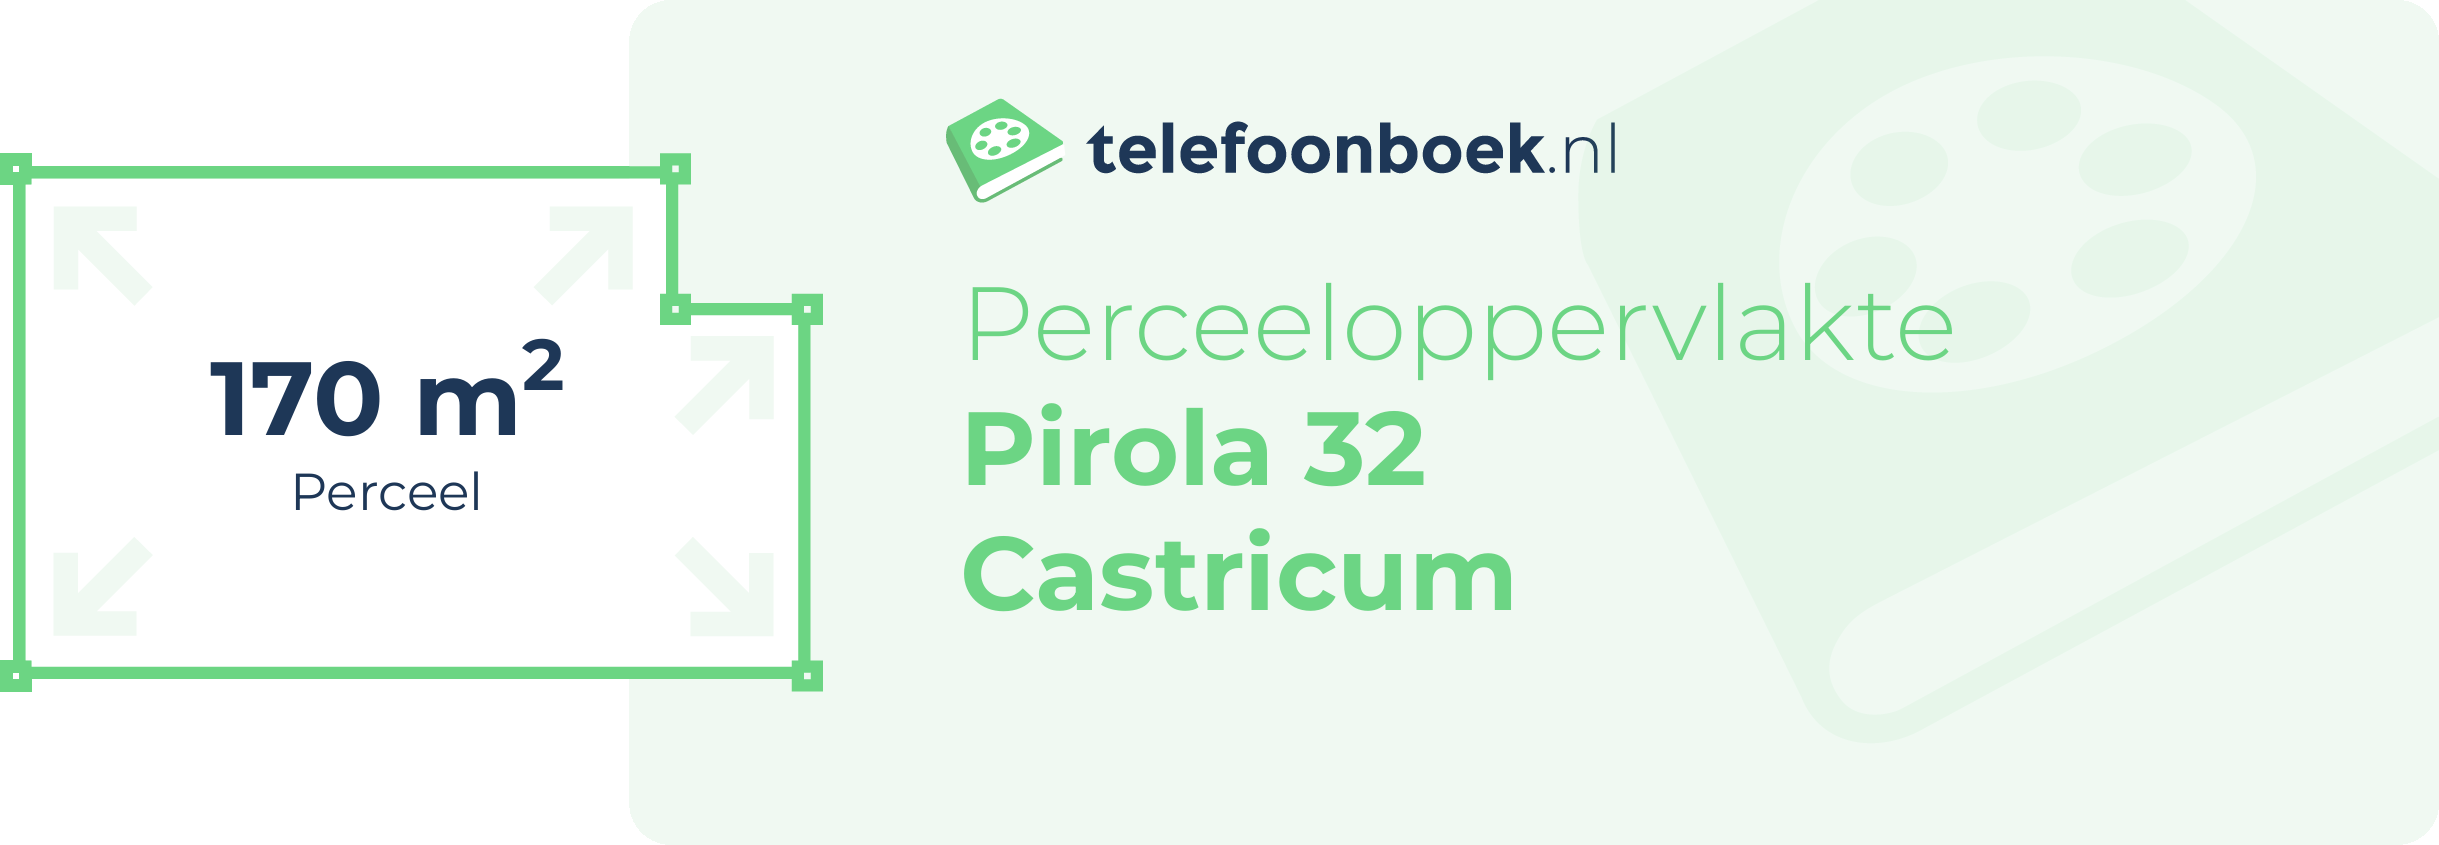 Perceeloppervlakte Pirola 32 Castricum